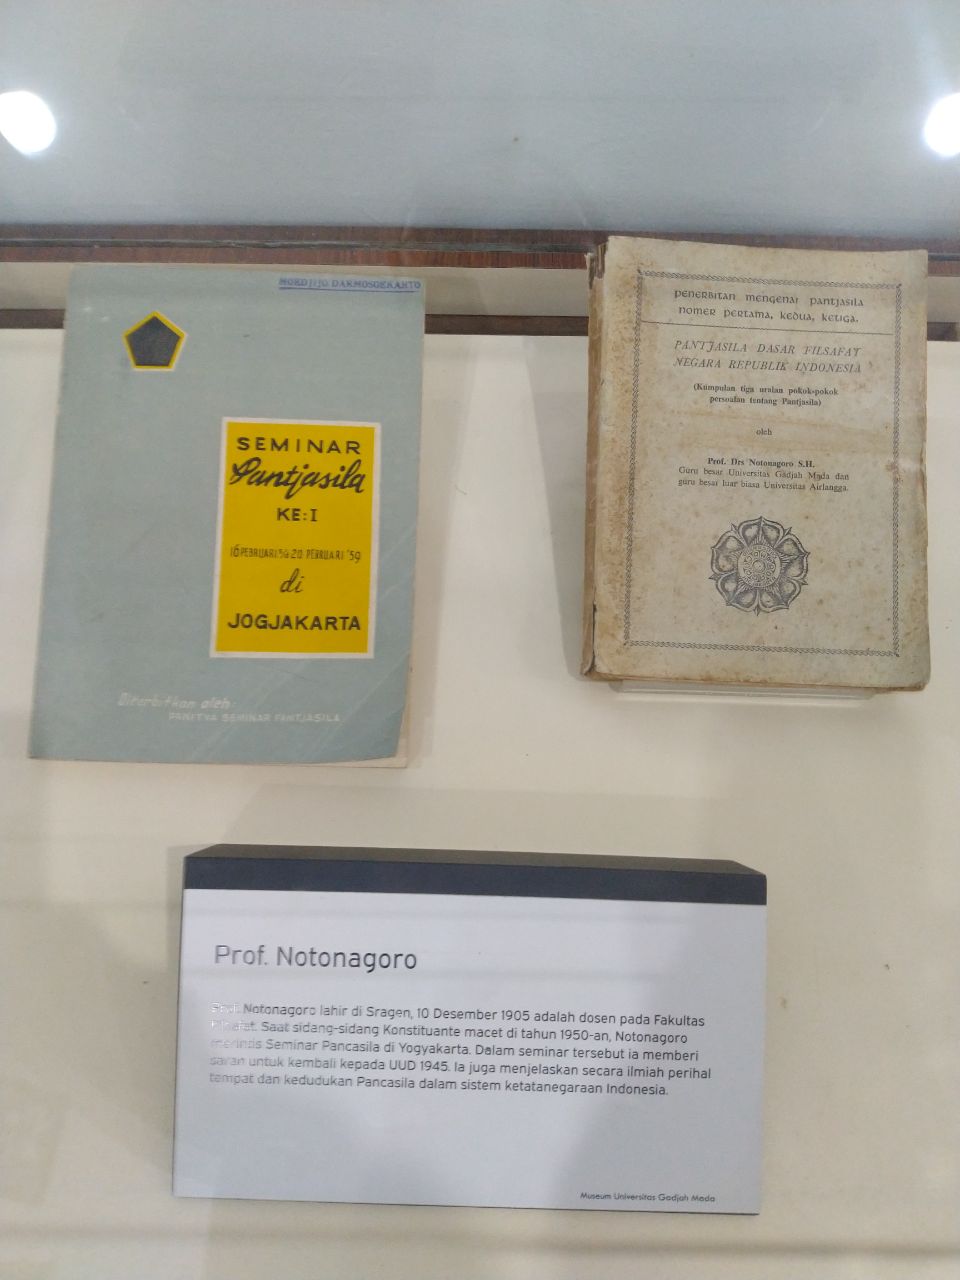 Koleksi buku terkait Prof. Notonagoro